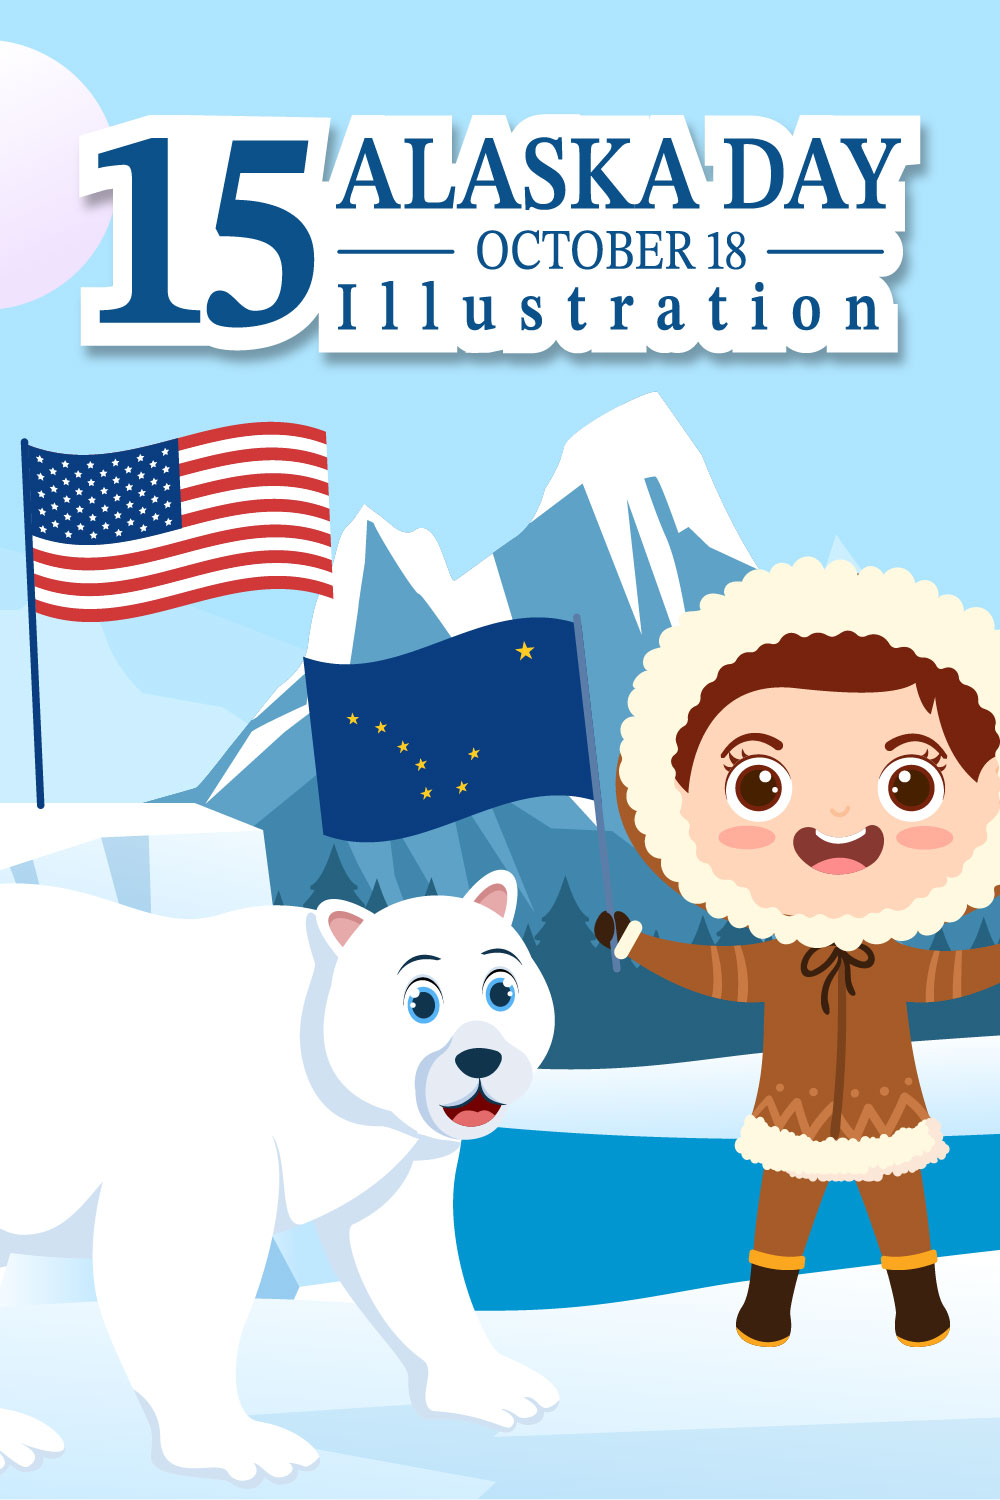 15 Happy Alaska Day Illustration Pinterest Image.